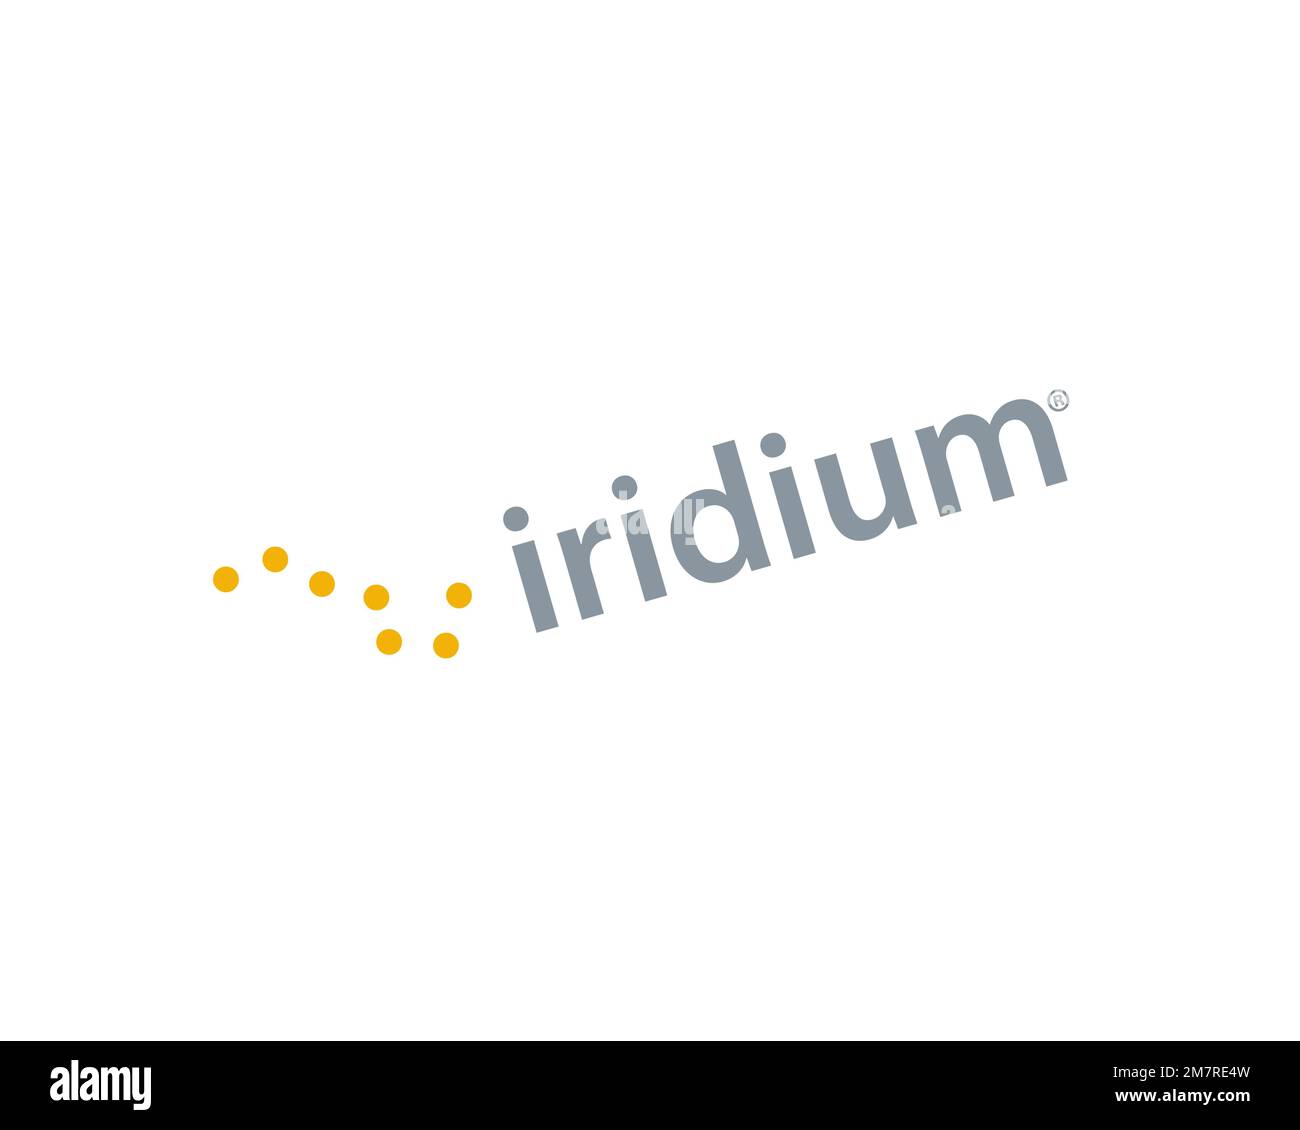 iridium logo